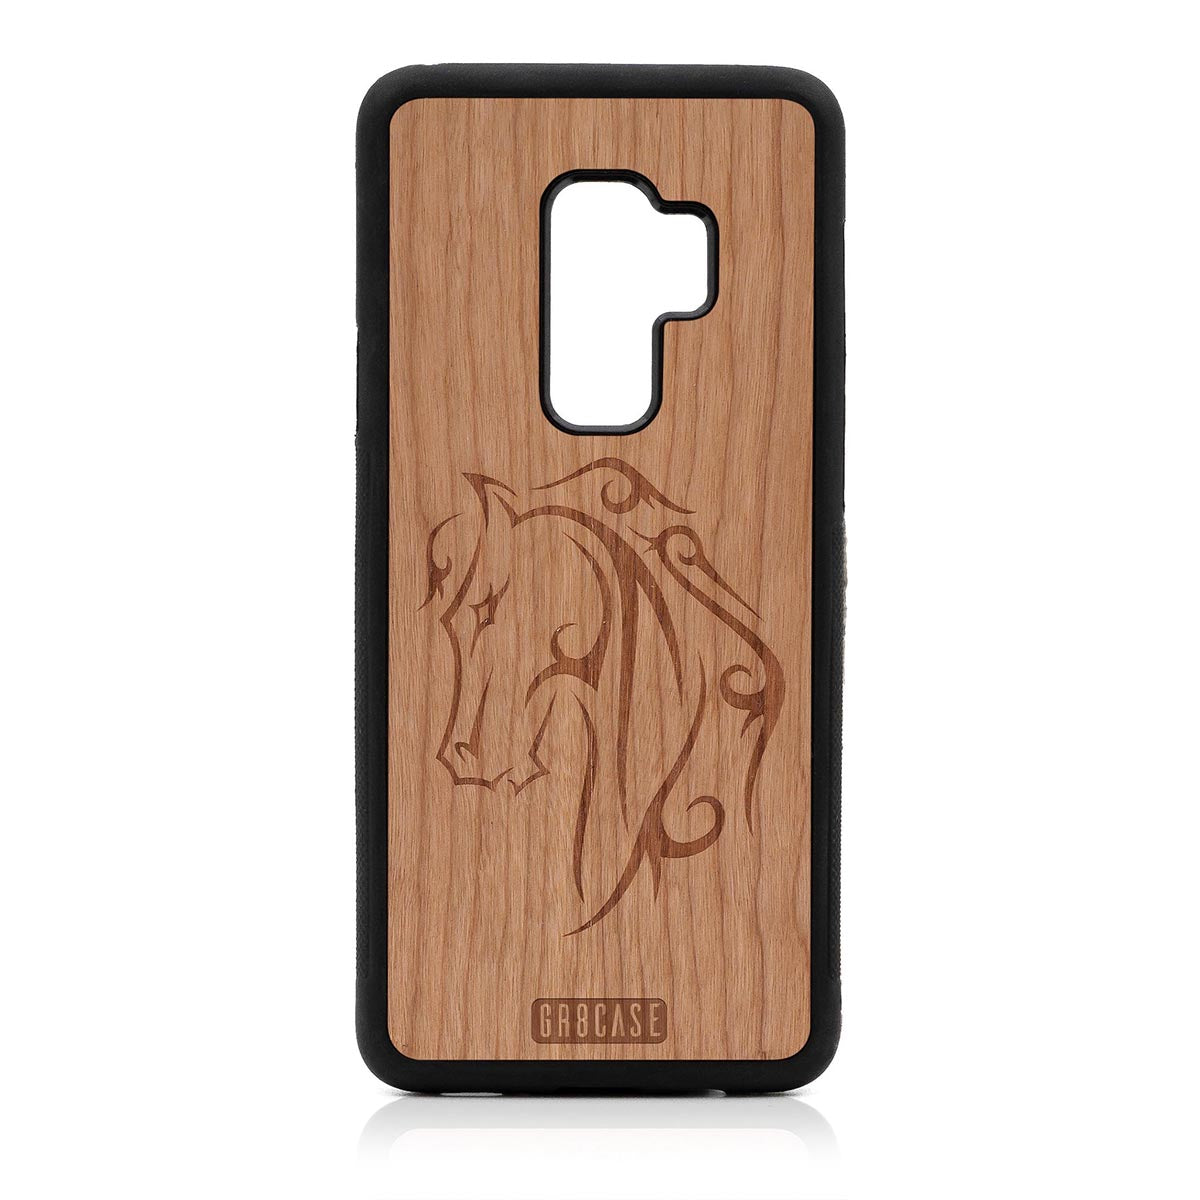 Horse Tattoo Design Wood Case Samsung Galaxy S9 Plus by GR8CASE